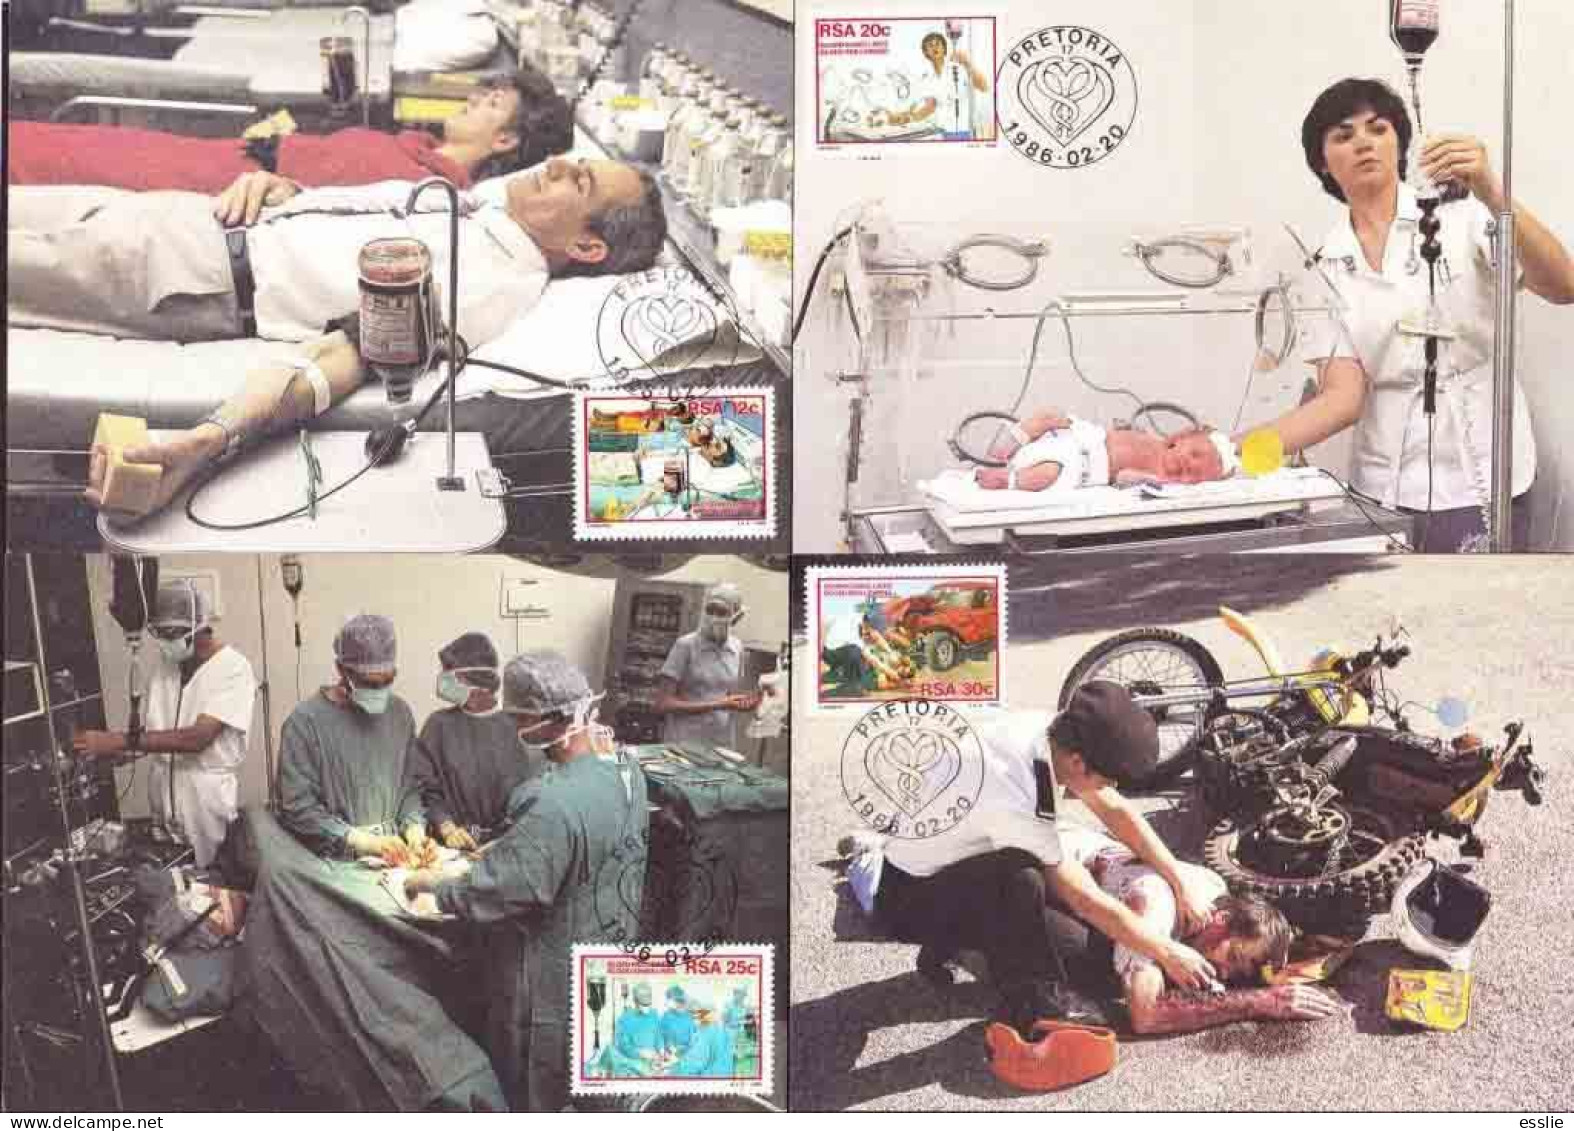 South Africa RSA - 1986 - Donate Blood - Complete Set Maximum Cards PostCards - Storia Postale